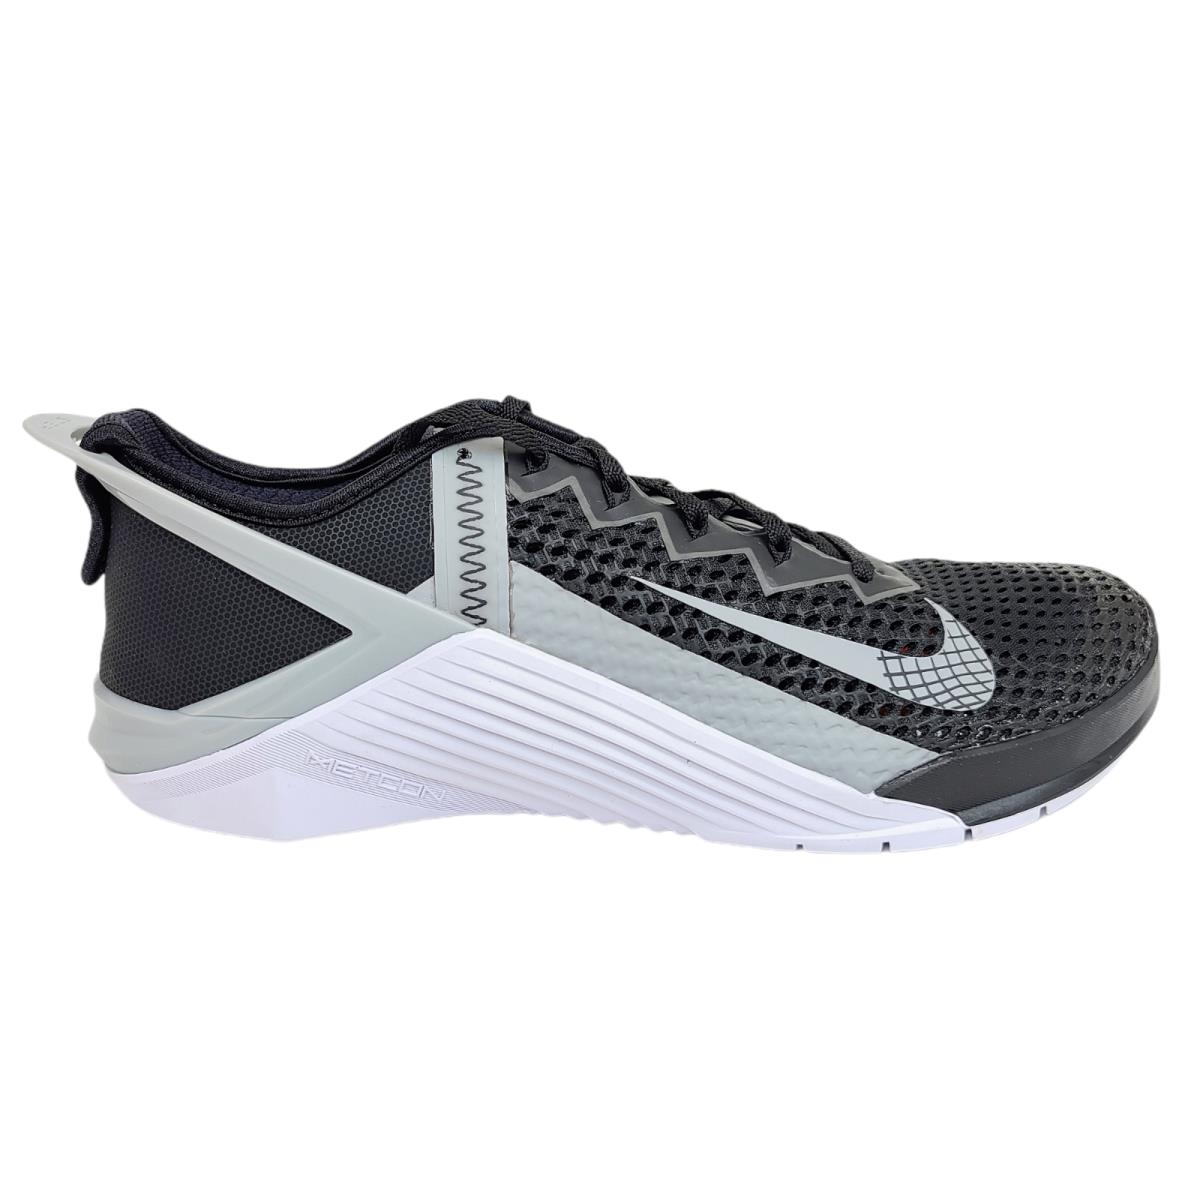 Nike shoes Metcon - Black 10